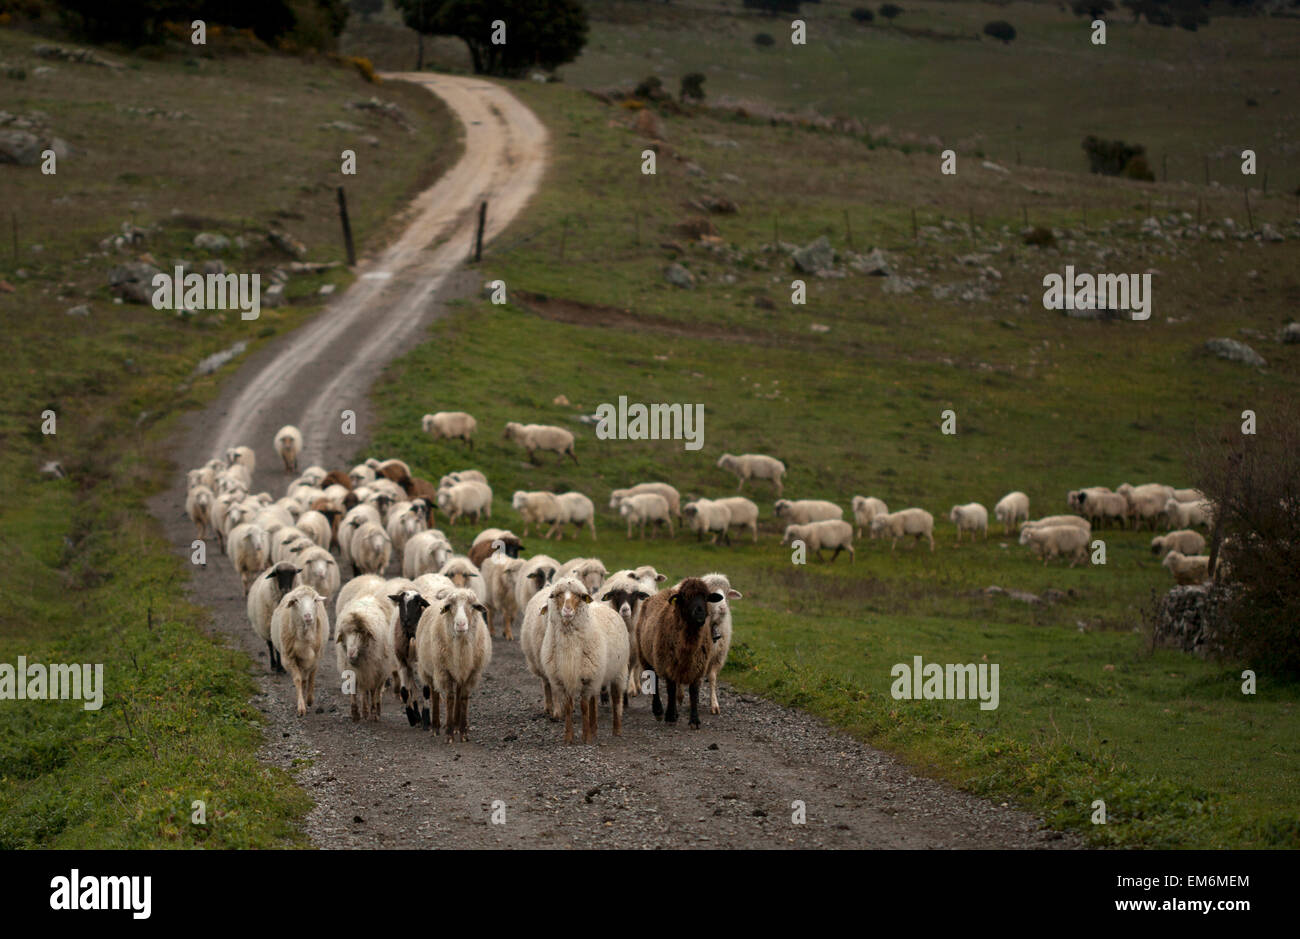 A flock of sheep walk in a dirt road in Villaluenga del Rosario, in the Sierra de Grazalema National Park, Cadiz province, Andalusia, Spain Stock Photo